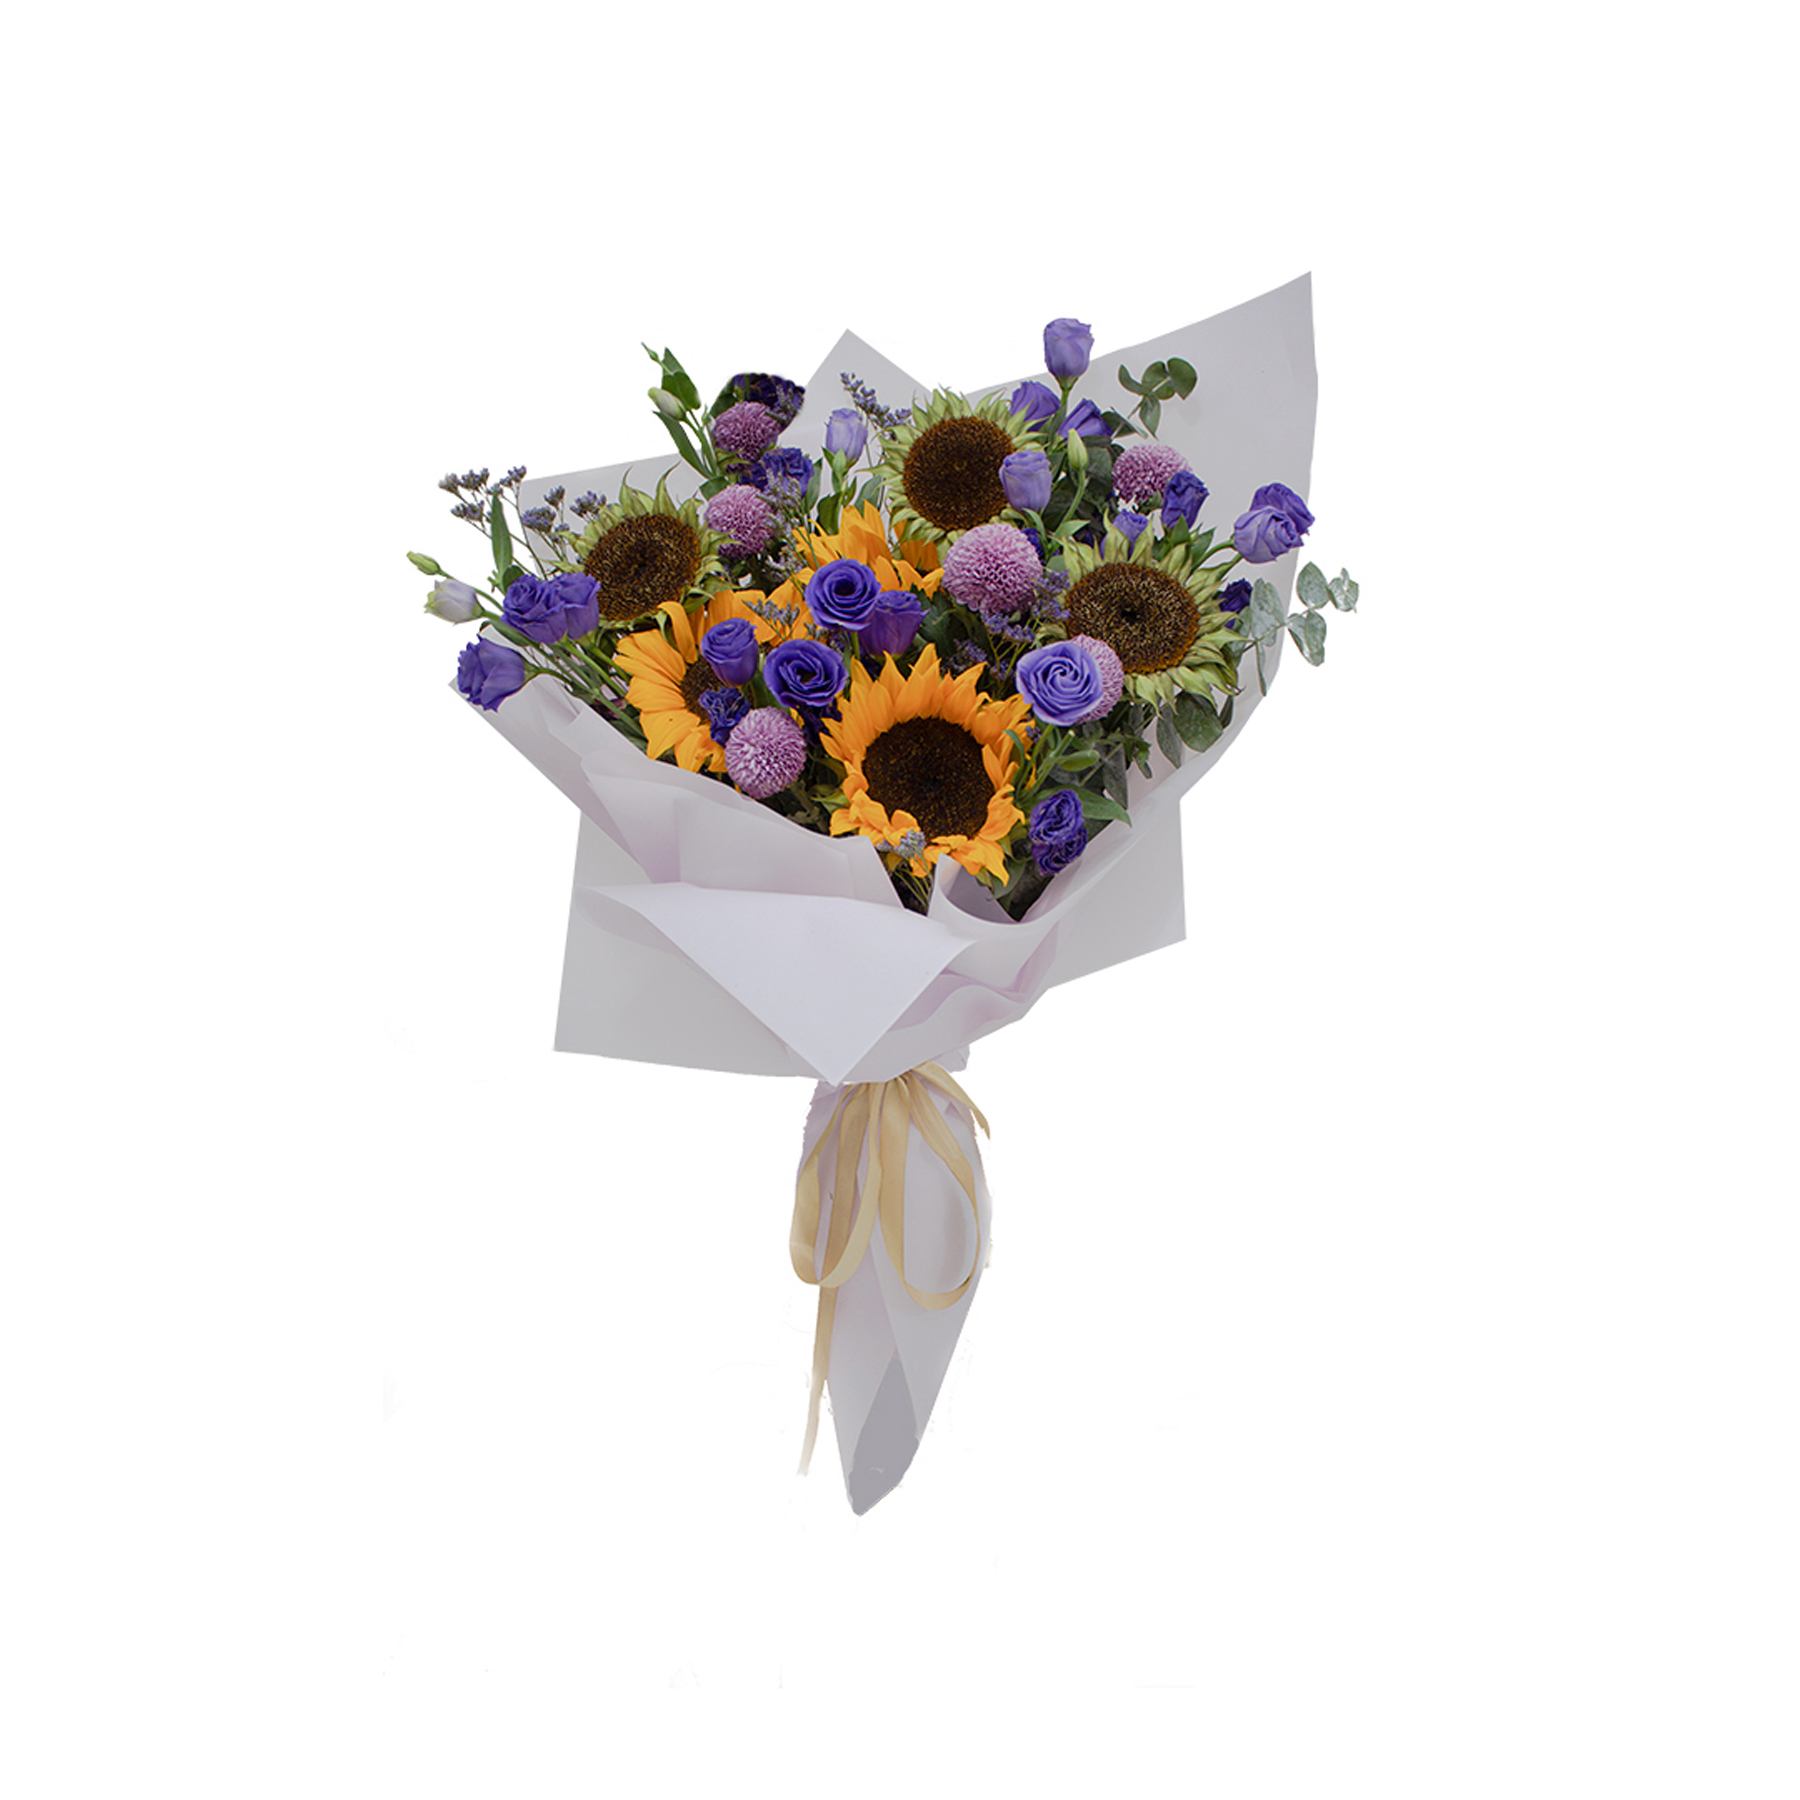 bouquet sun flowers with purple lisialthus & bambo